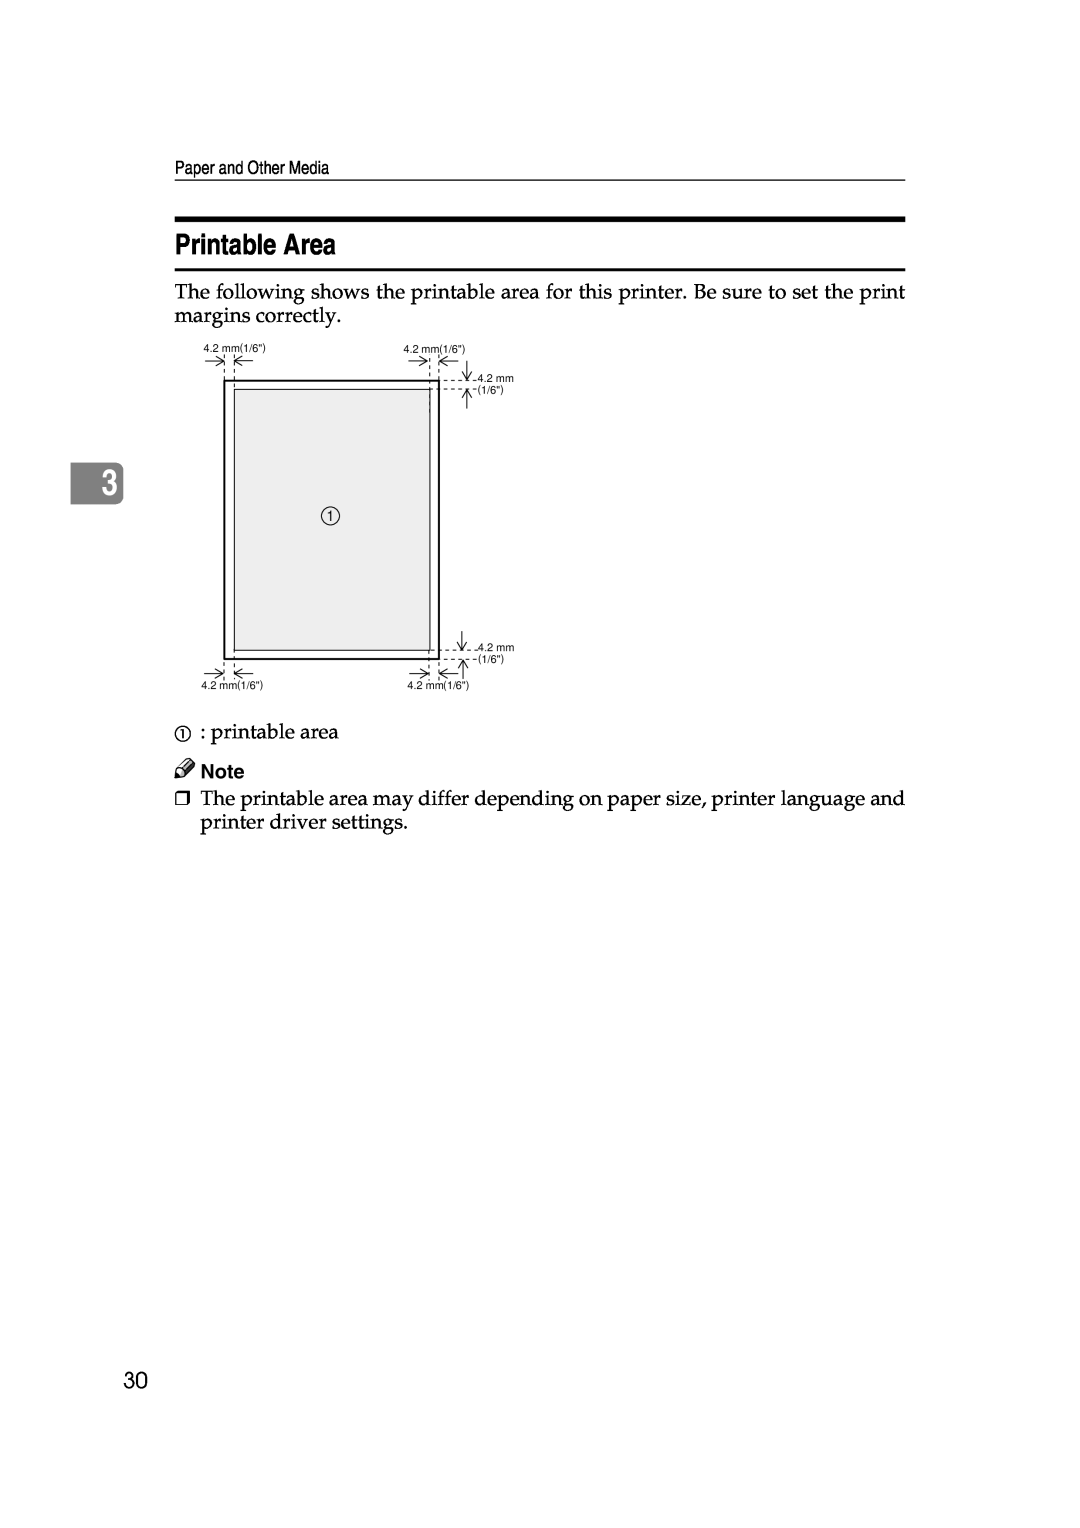 Lanier AP3200 manual Printable Area 